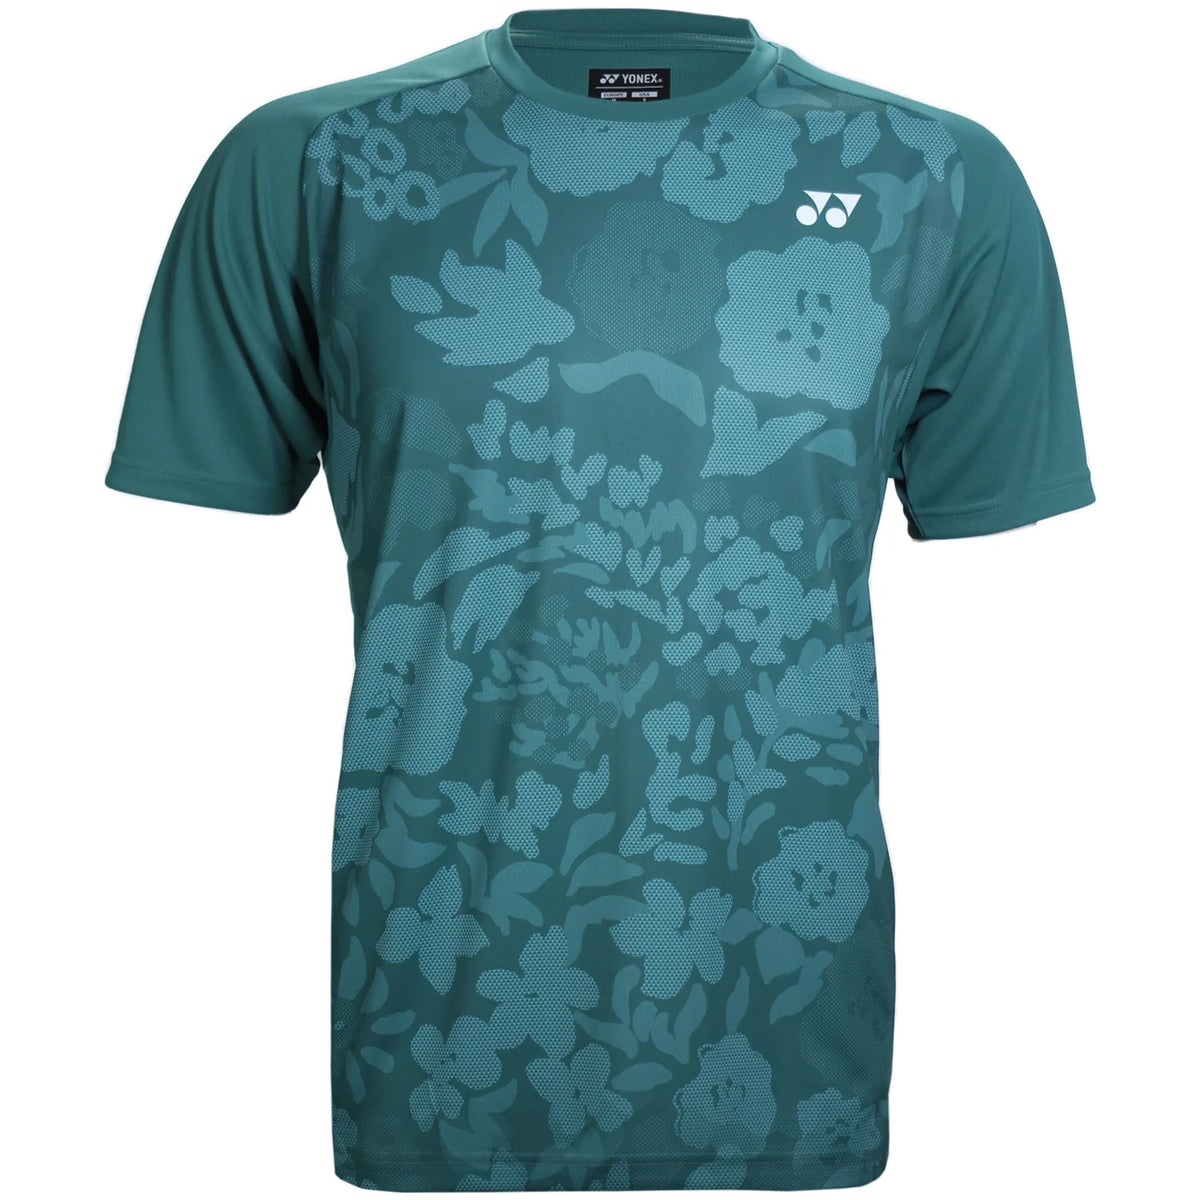 Yonex 16631 Axelsen Replica Mens Badminton Shirt